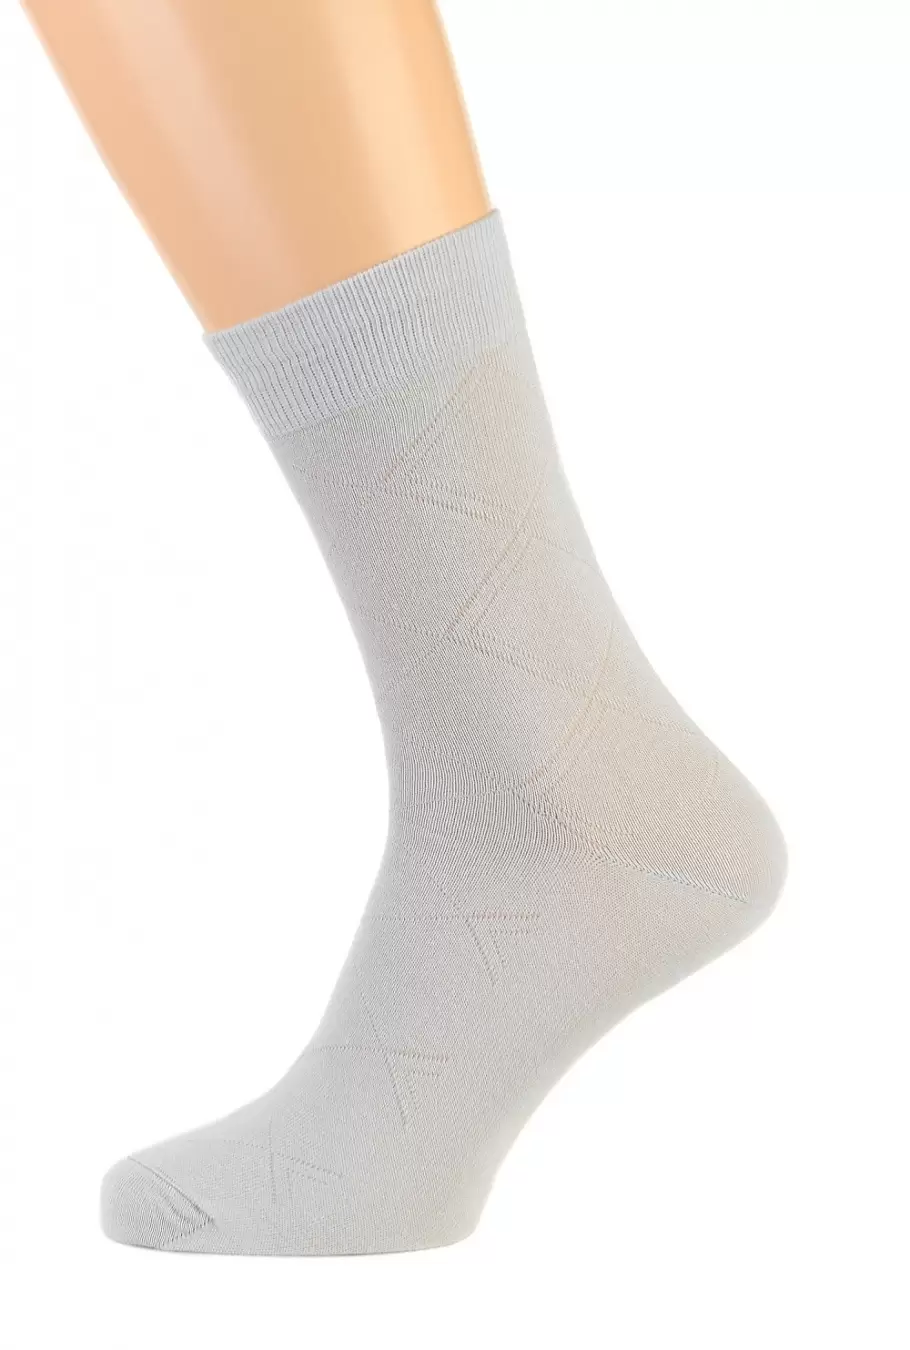 pingons 6A17, мужские носки РАСПРОДАЖА (изображение 1)